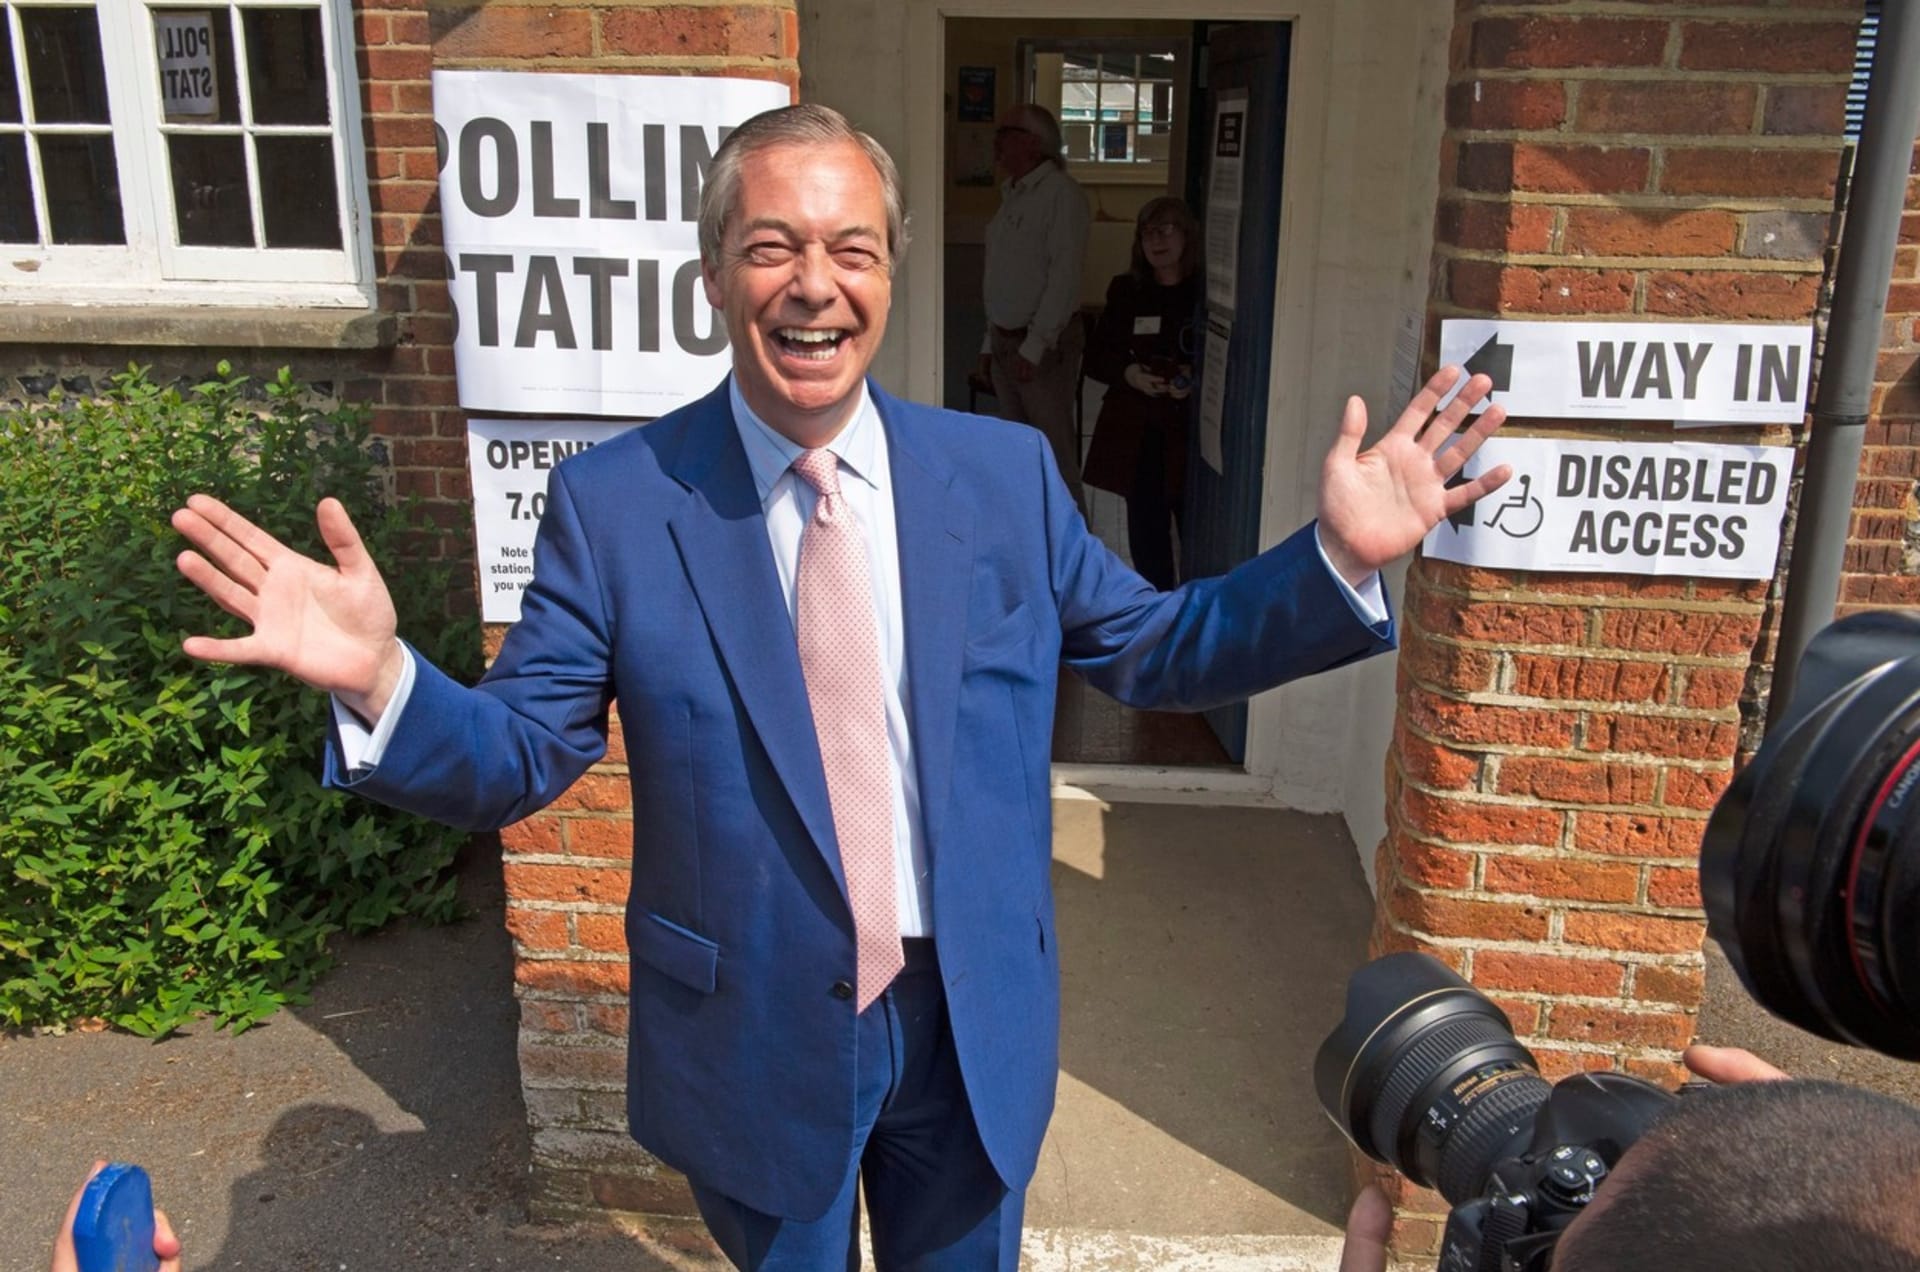 Nigel Farage v Downe při volbách v roce 2019